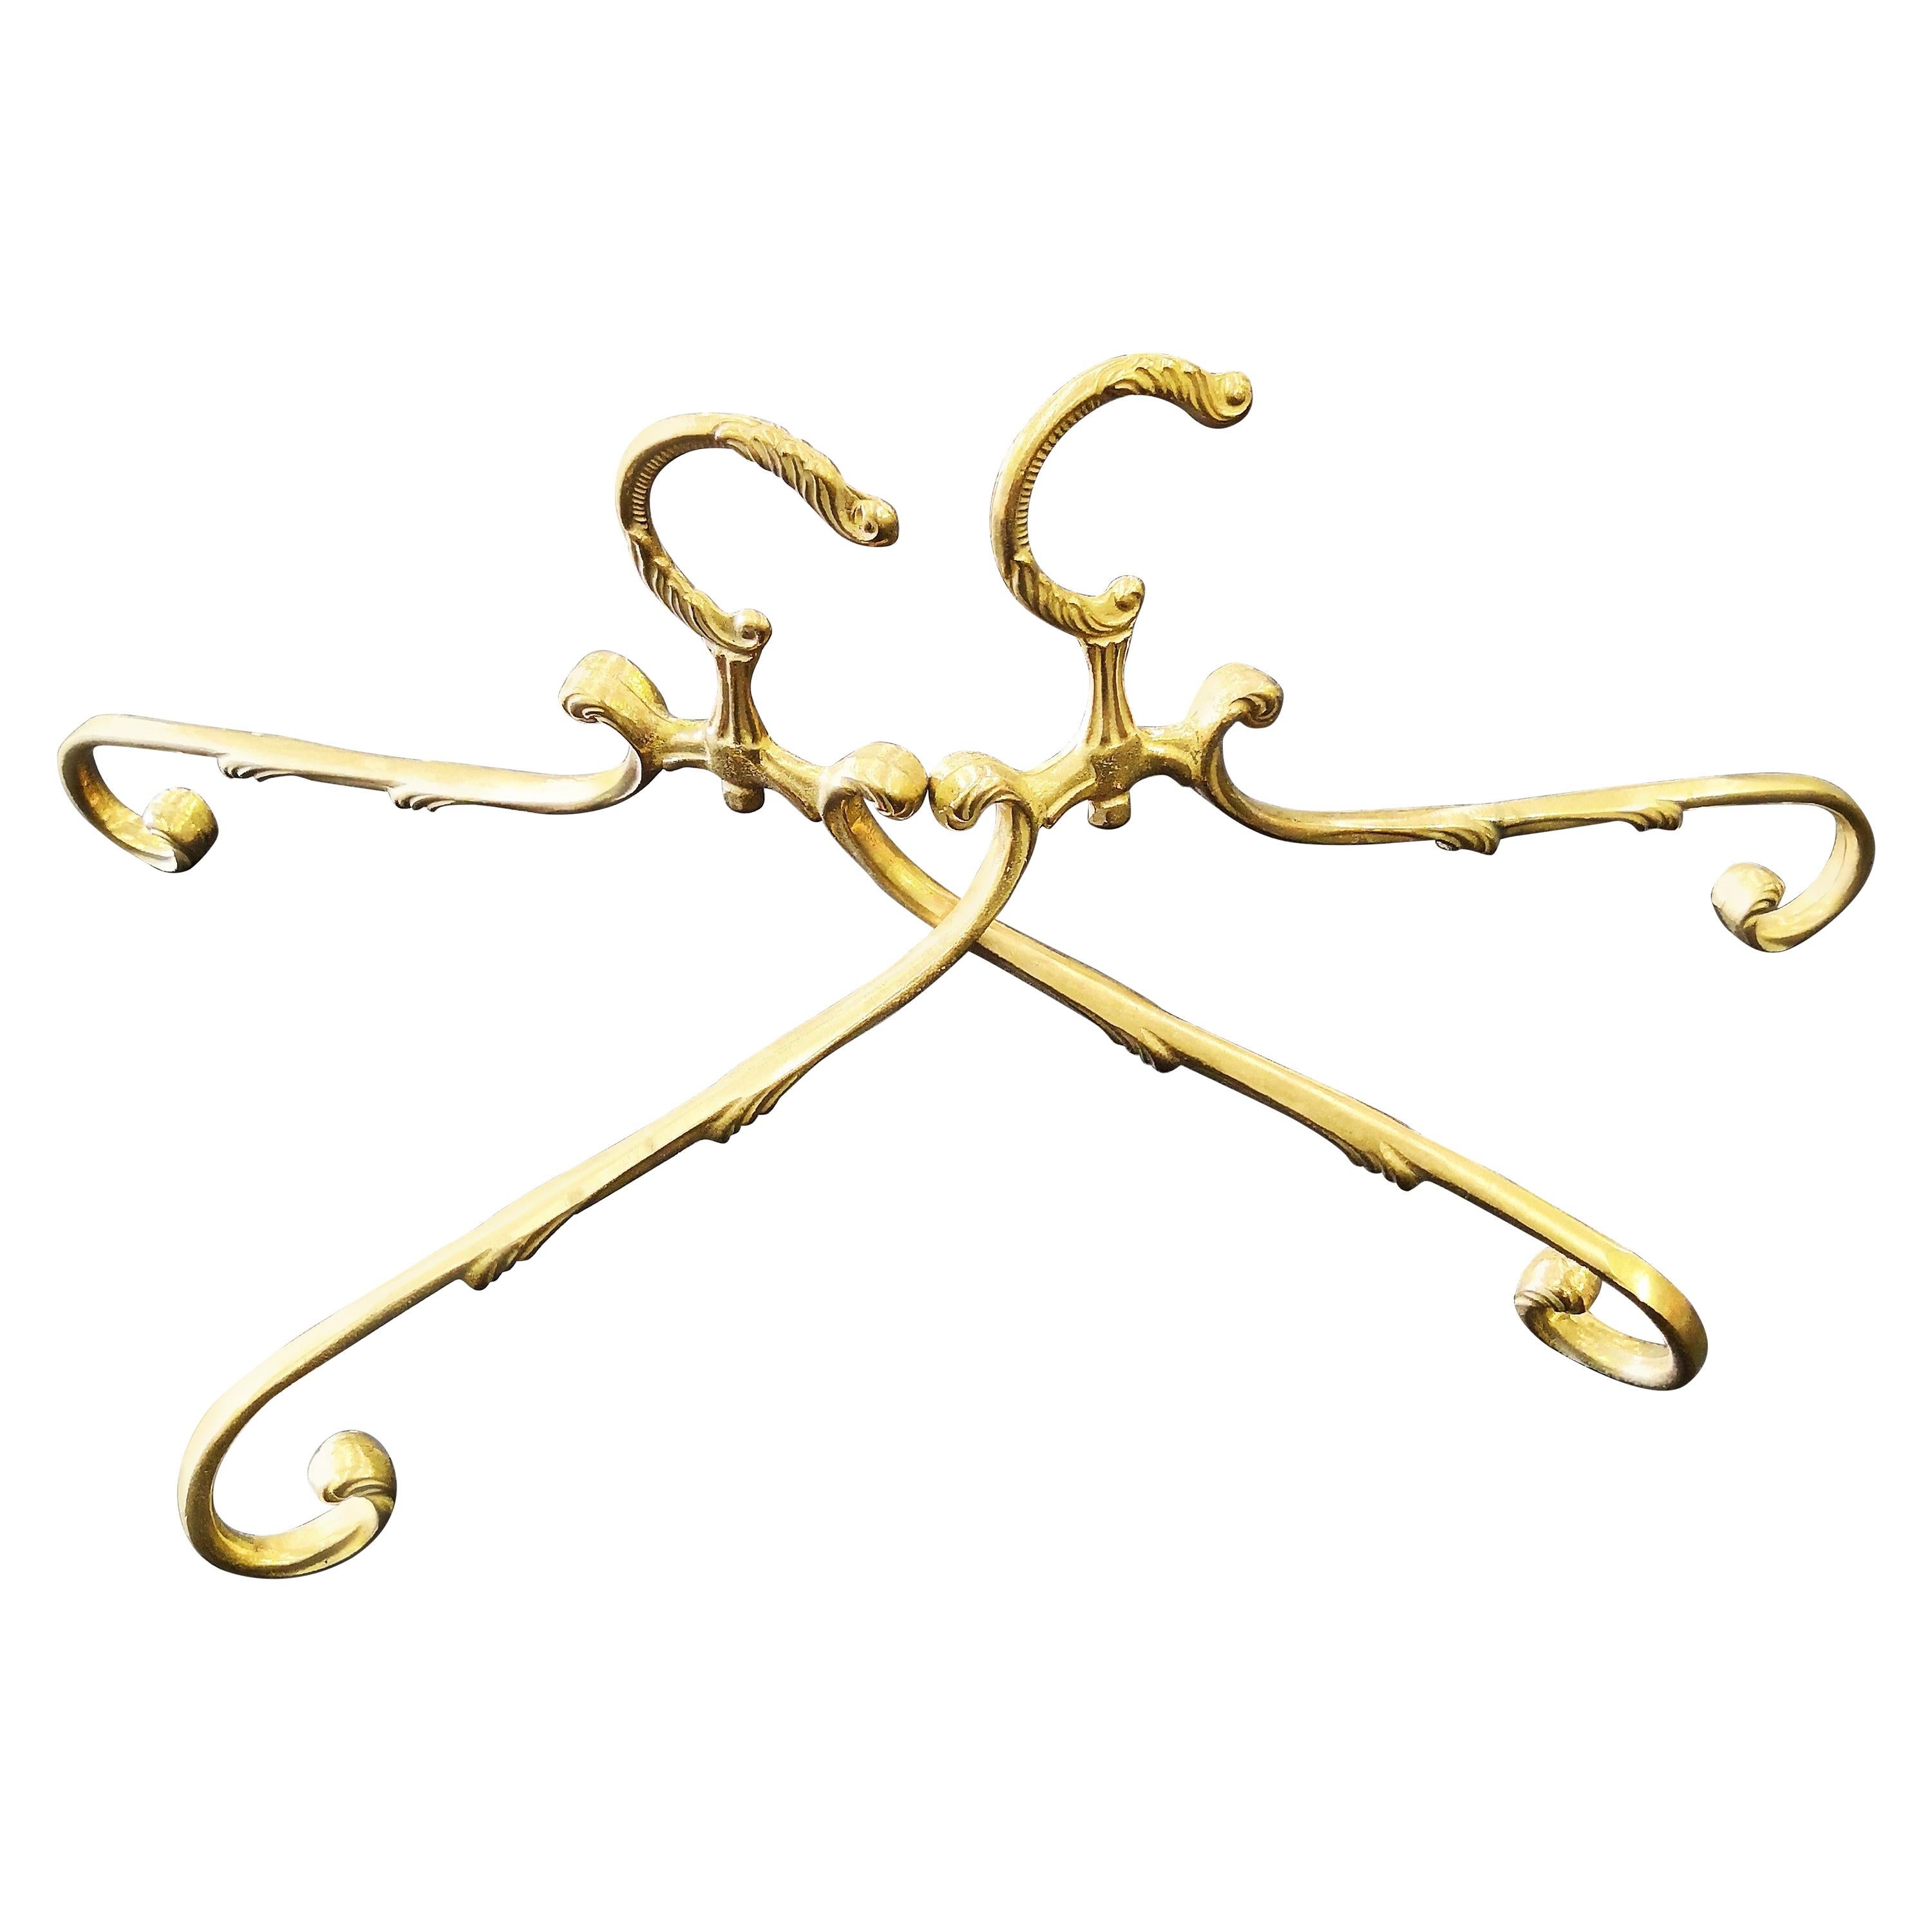 1980s Italian Hollywood Regency Neoclassical Solid Brass Coat Hangers